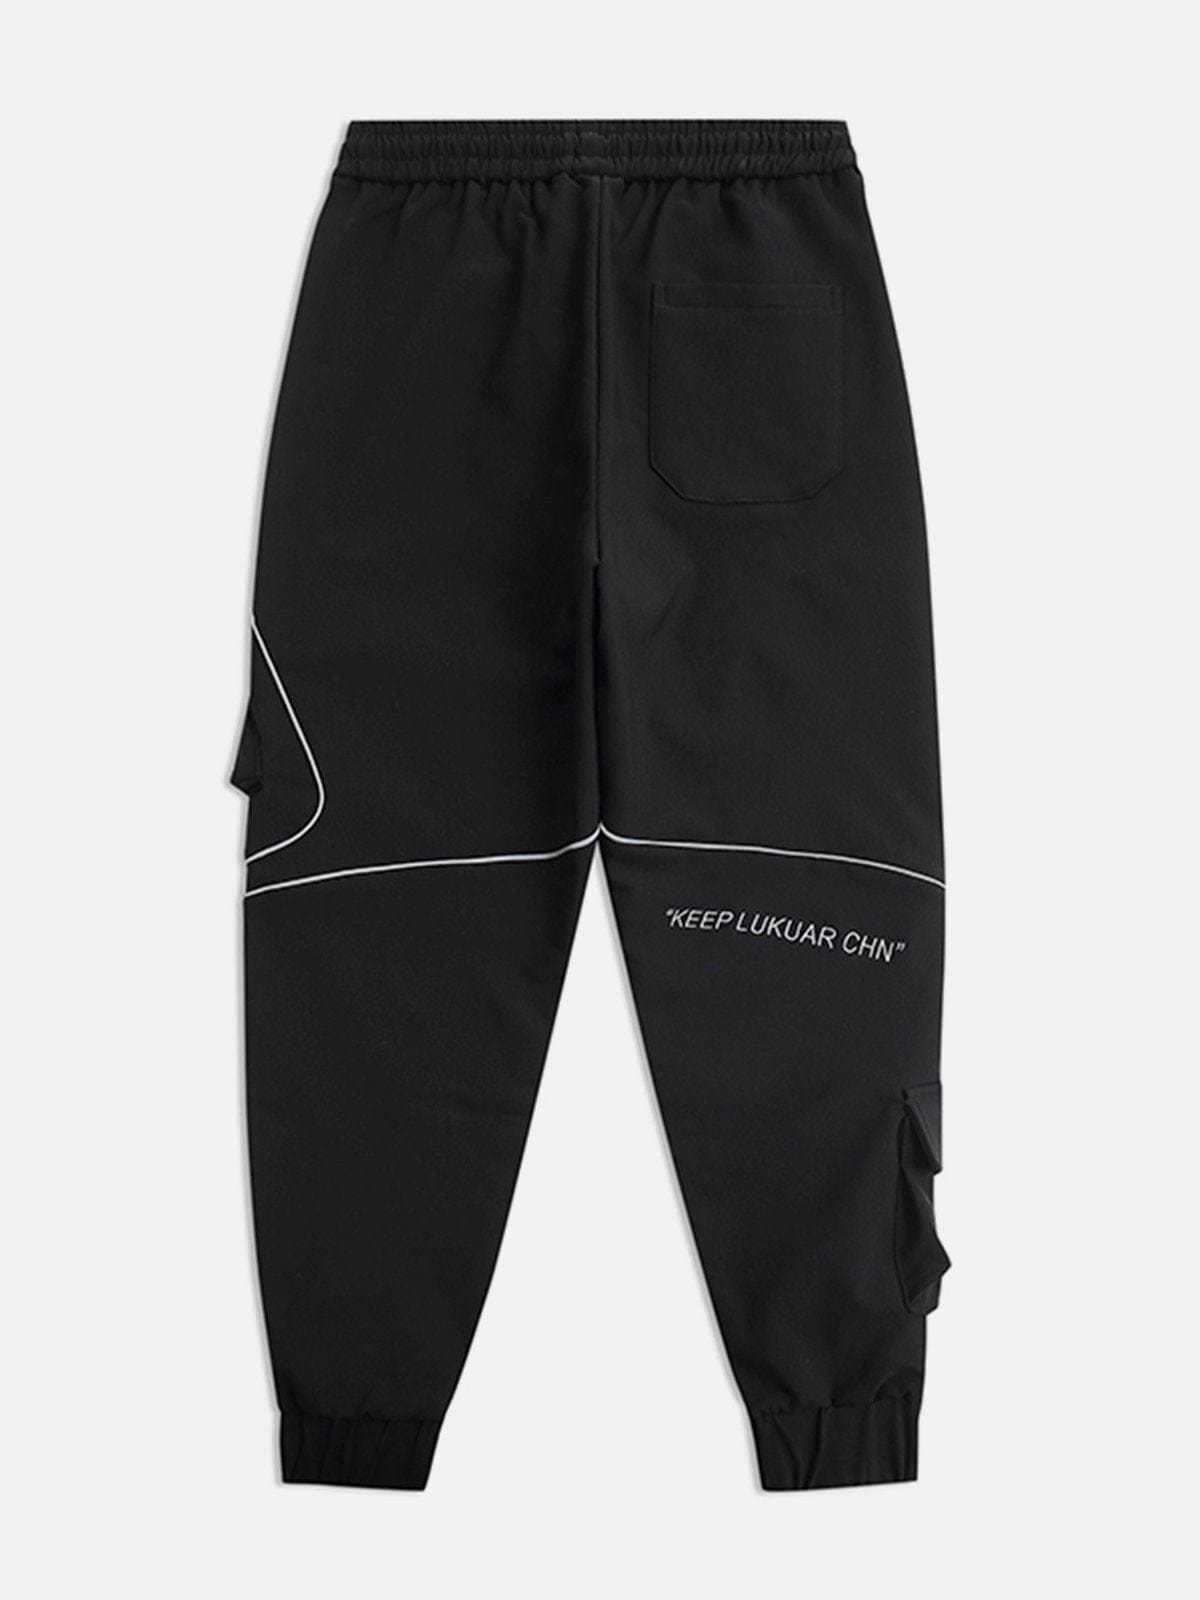 Asymmetrical Multi Pockets Pants Streetwear Brand Techwear Combat Tactical YUGEN THEORY